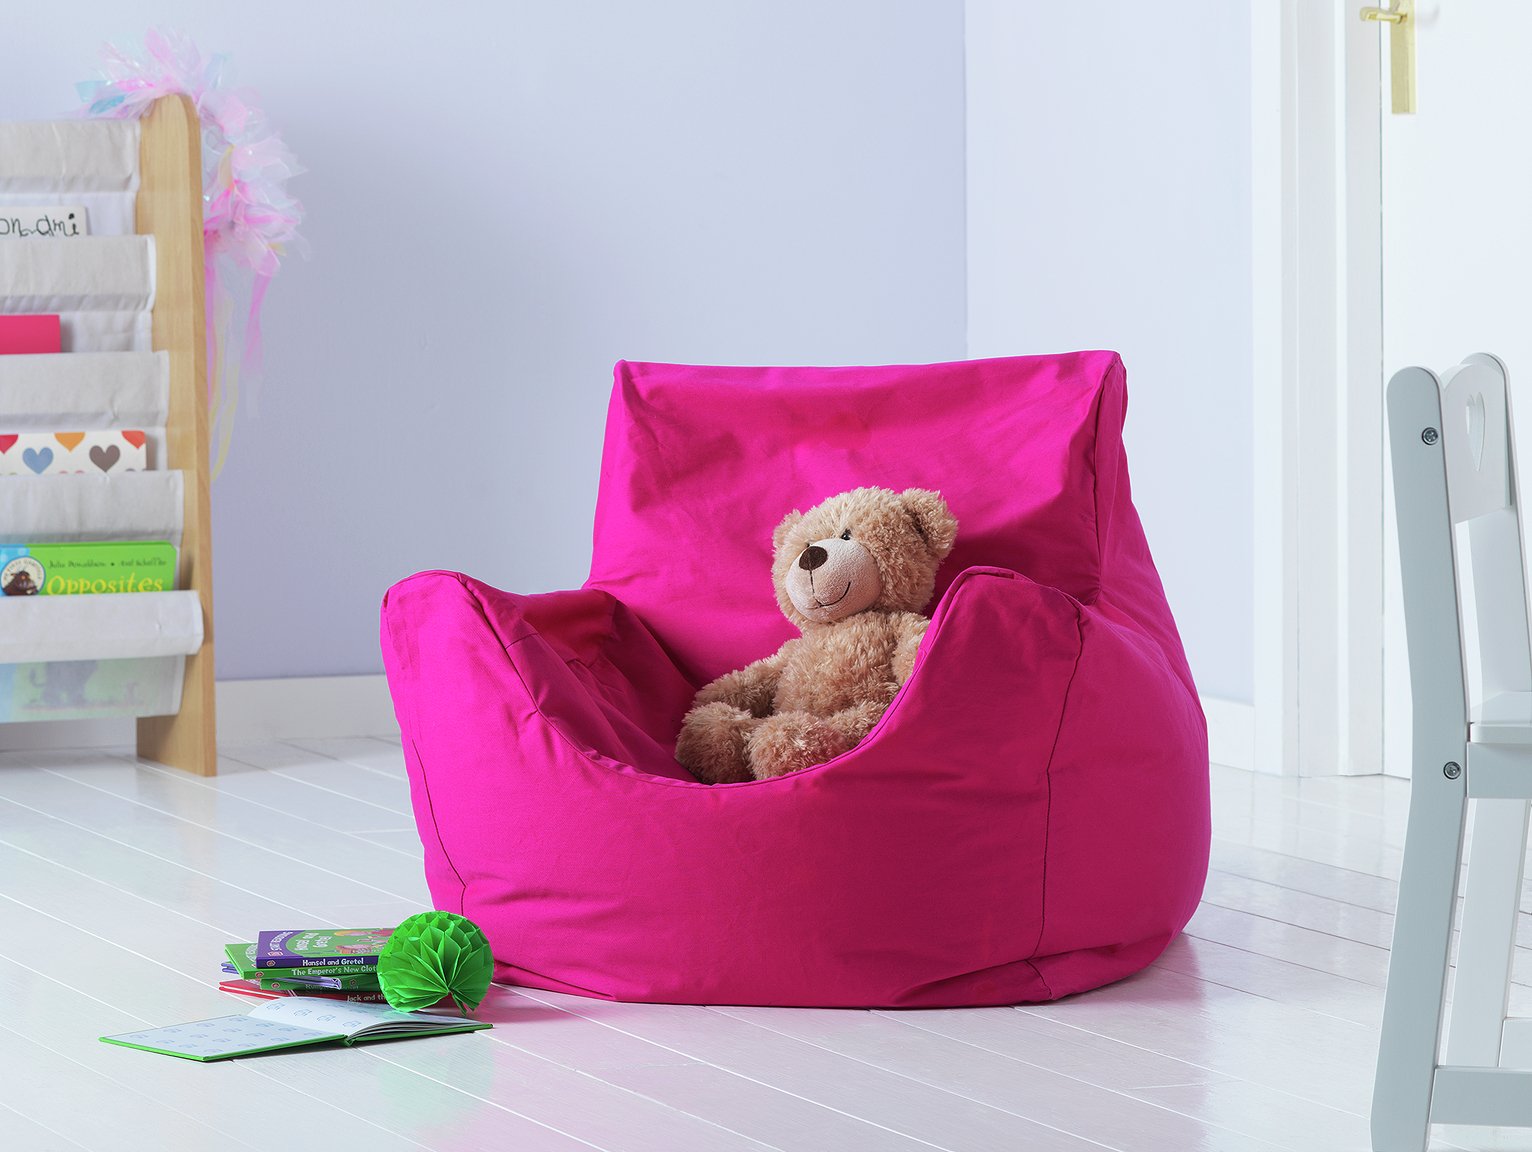 Argos Home Kids Funzee Pink Bean Bag Chair Review